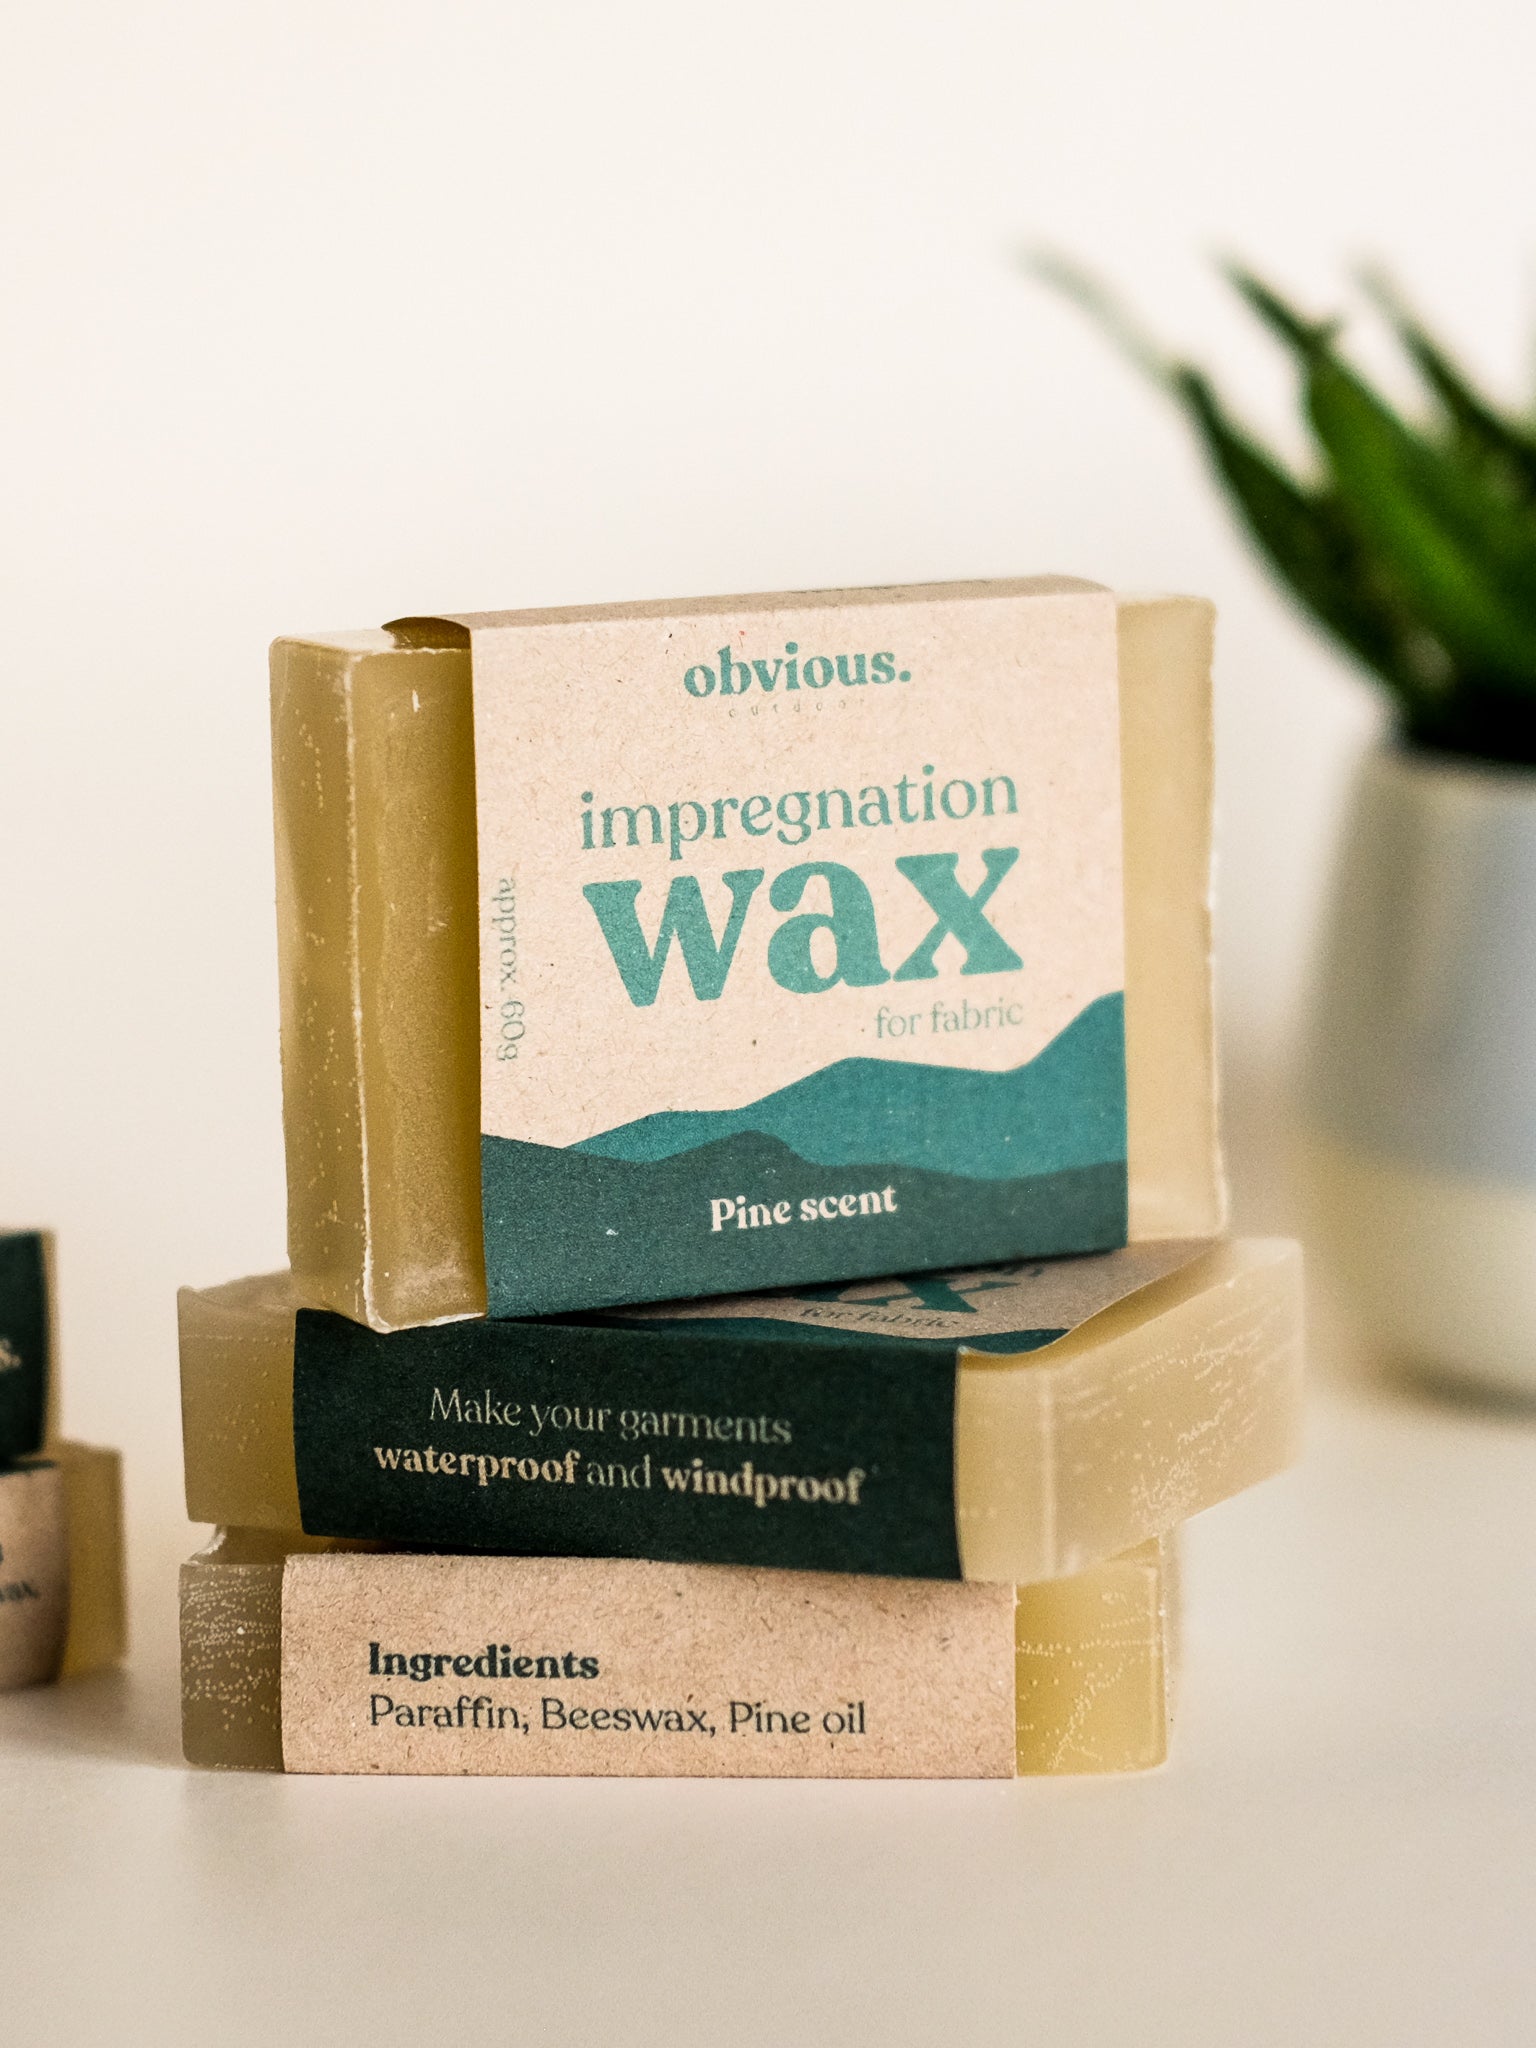 Impregnation Wax (Pine scent)